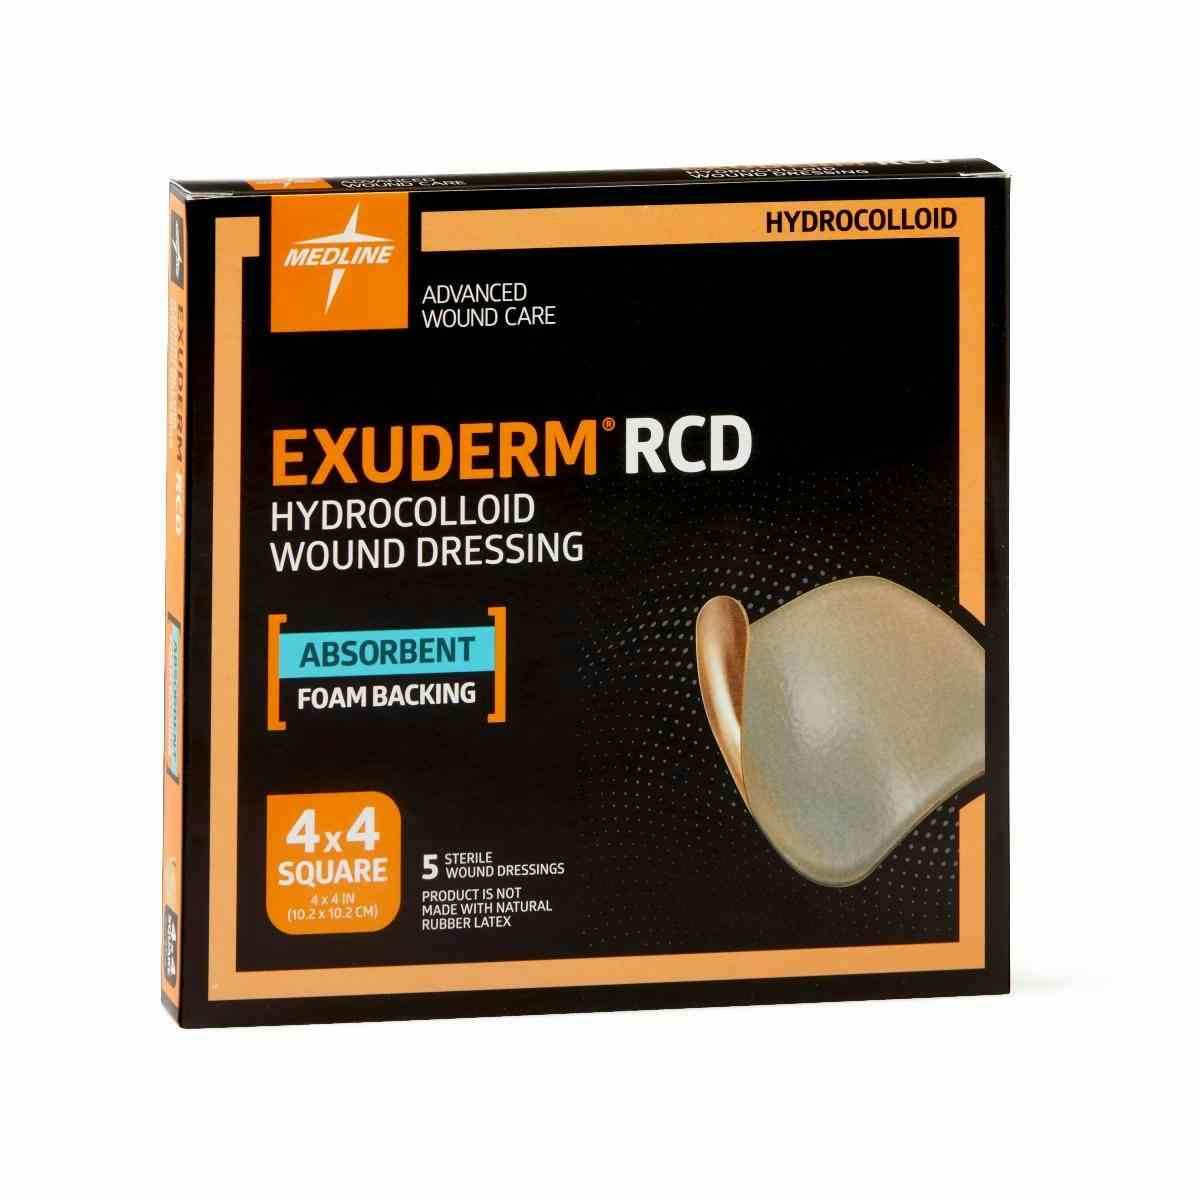 Exuderm RCD Hydrocolloid Wound Dressing, MSC5200, 4" X 4" - Box of 5 